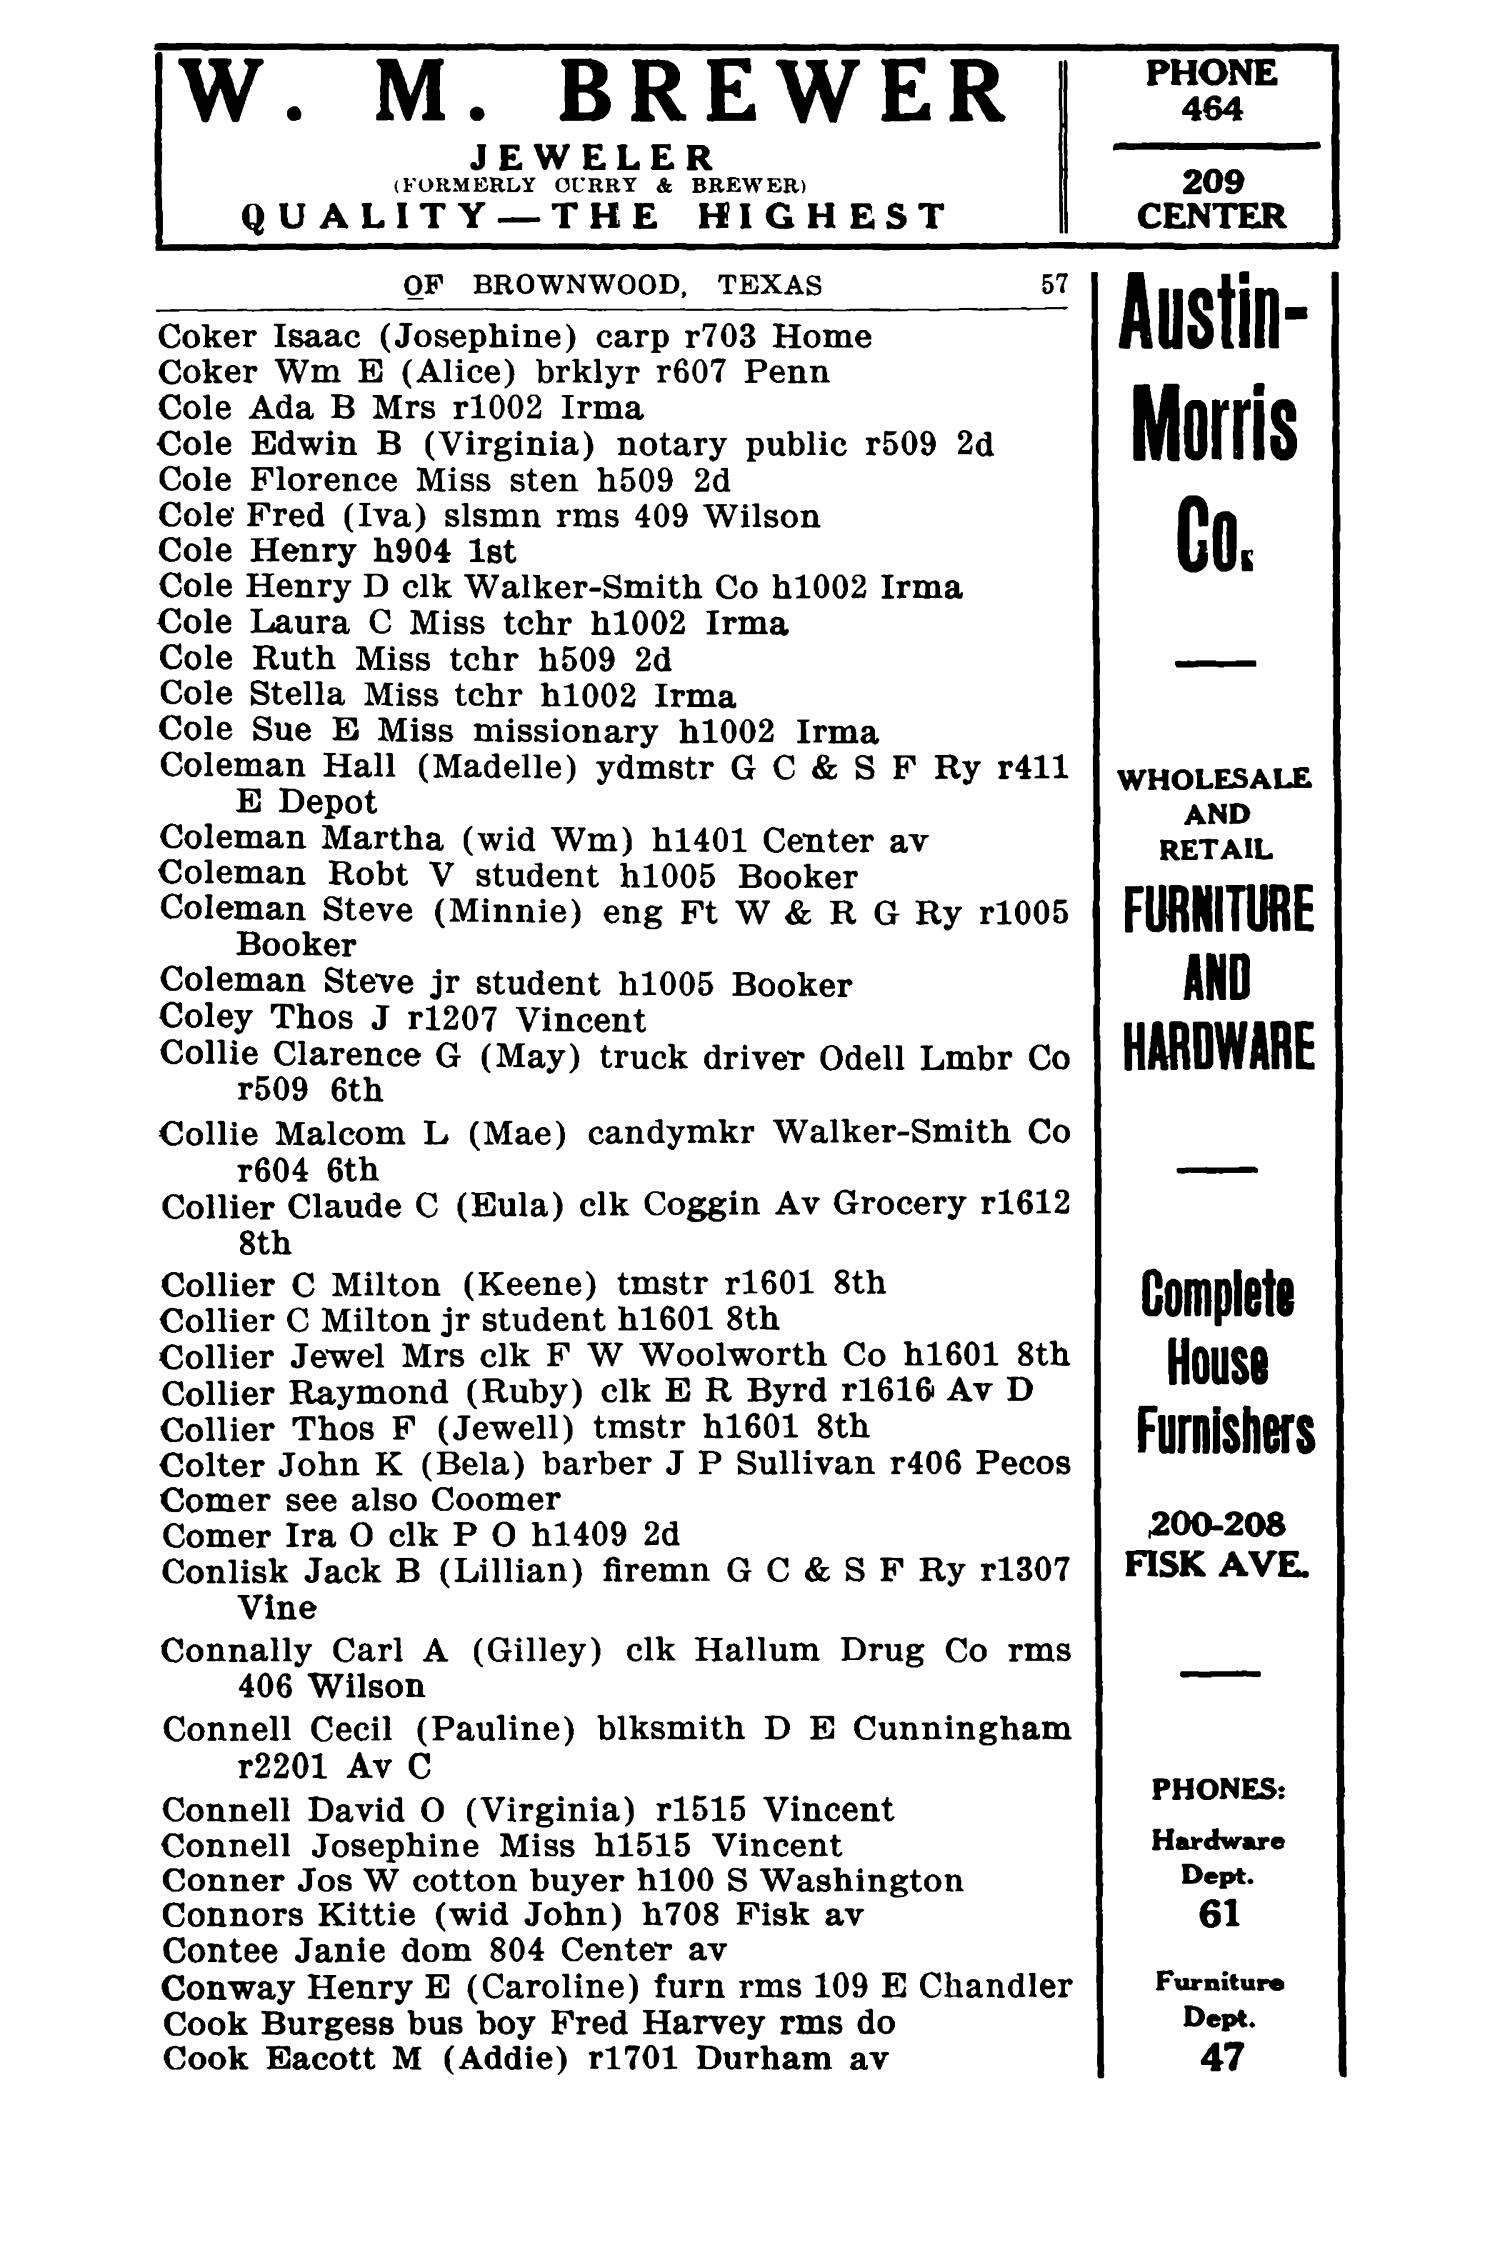 Brownwood City Directory, 1925
                                                
                                                    57
                                                